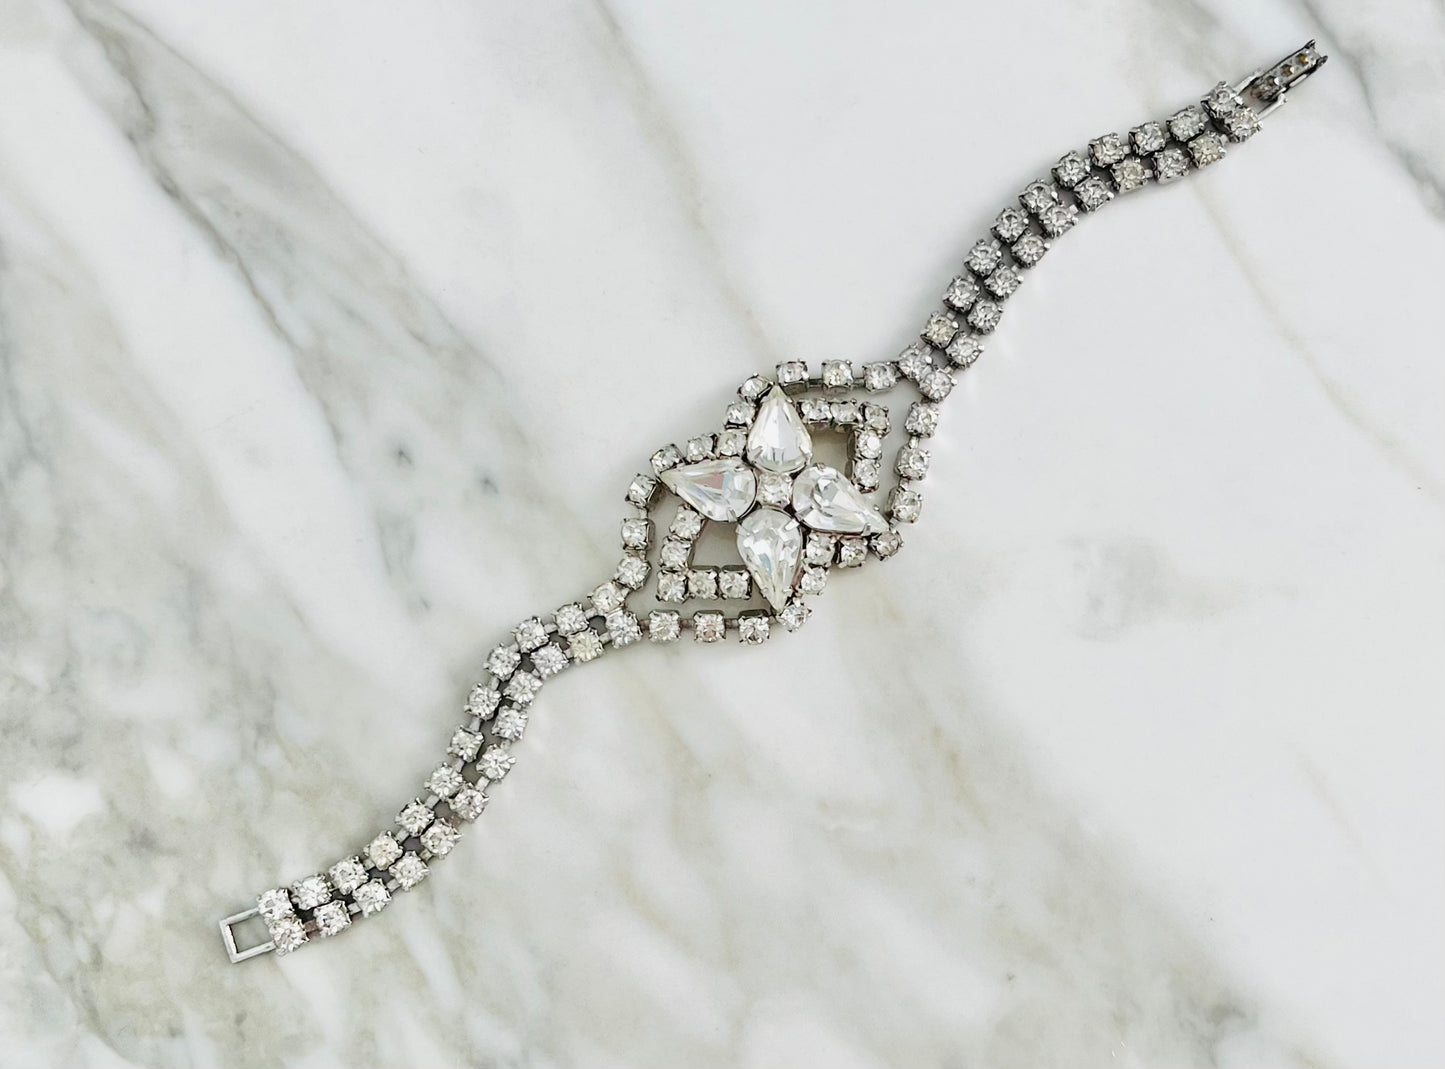 Vintage MidCentury Art Deco Inspired Rhinestone Cocktail Bracelet